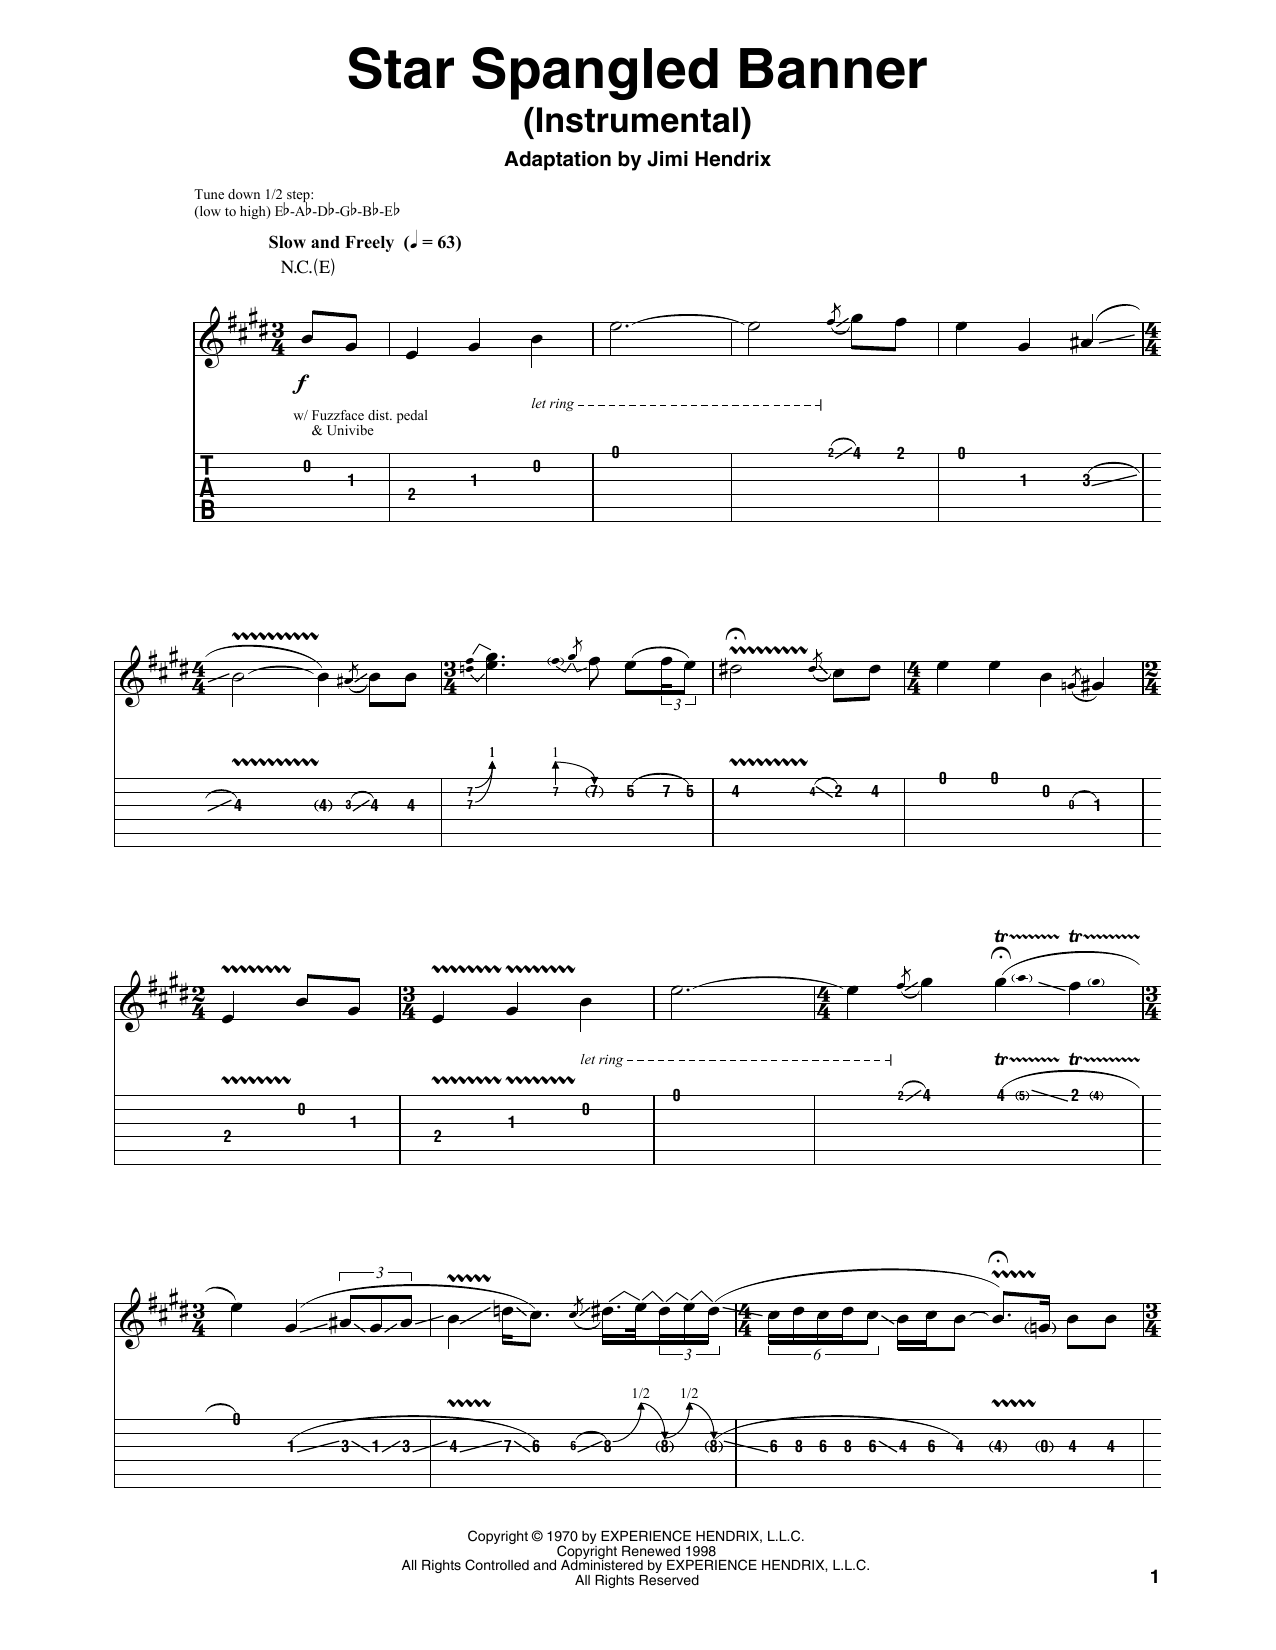 Download Jimi Hendrix Star Spangled Banner (Instrumental) Sheet Music